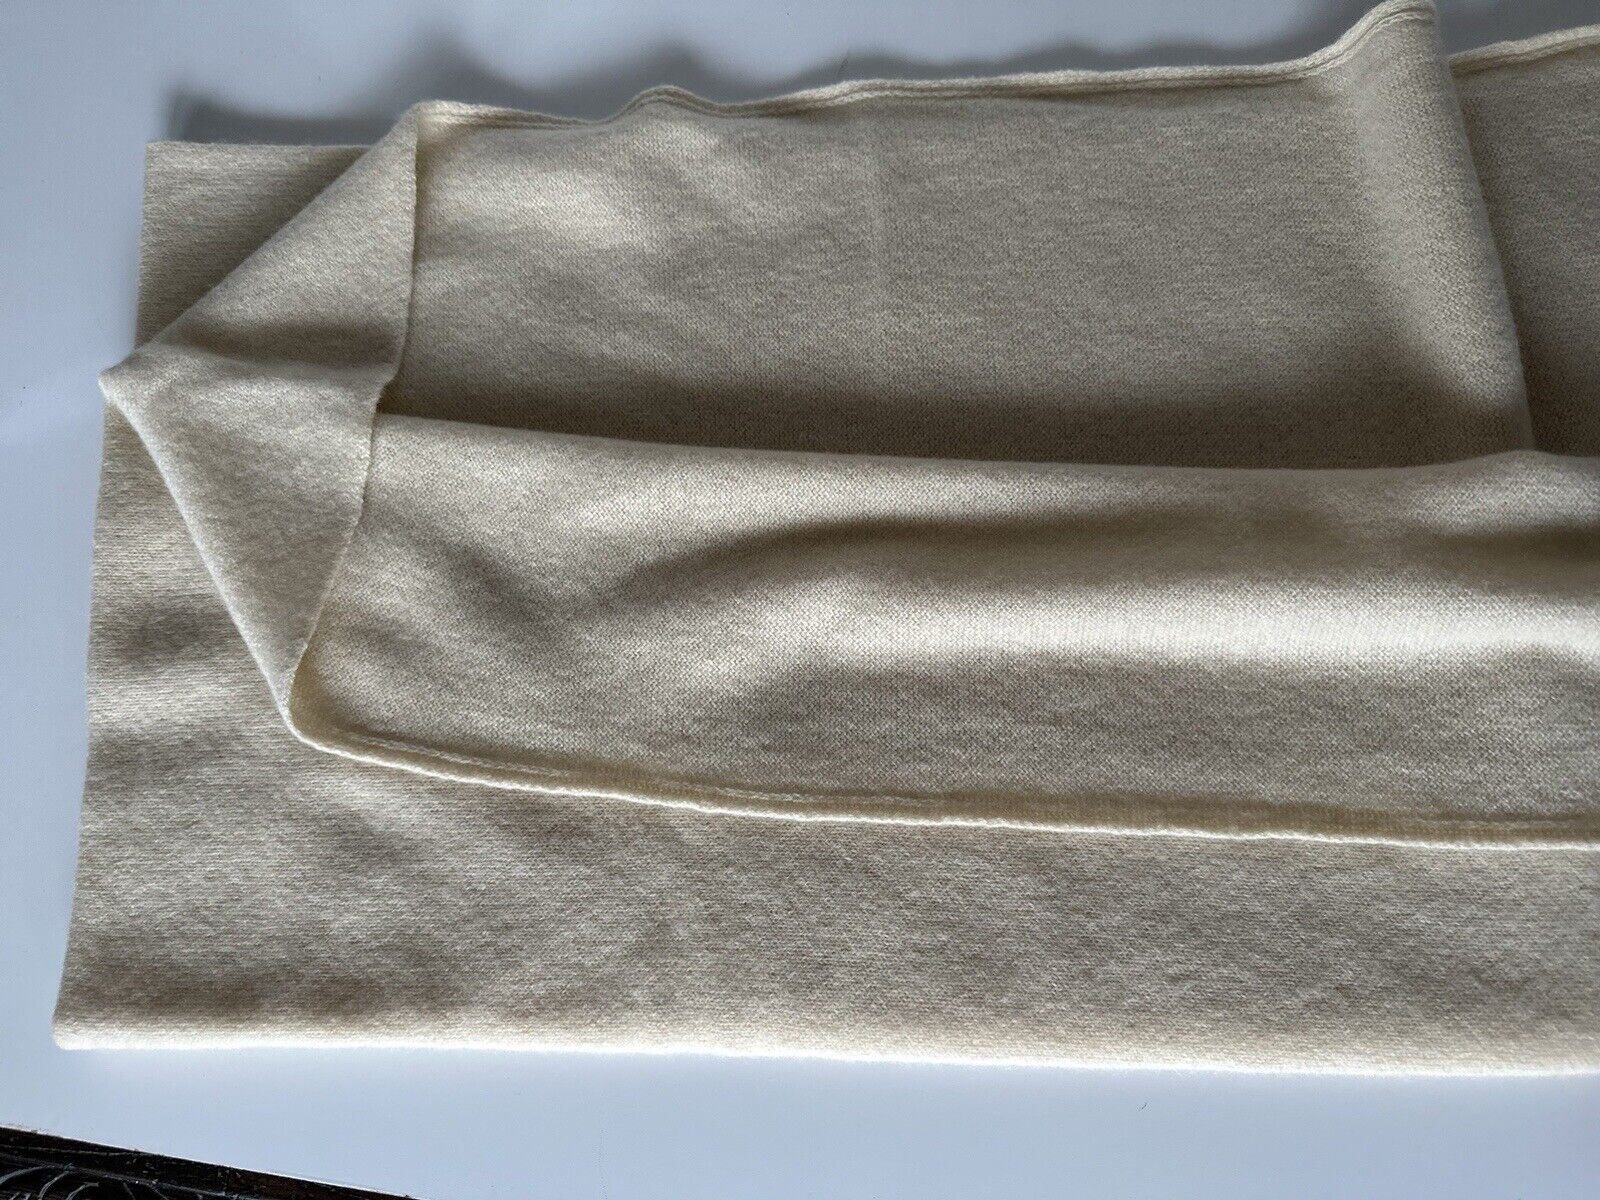 Neu mit Etikett: 1.170 $ Bottega Veneta Schal aus 100 % Kaschmir, hellbraun, 70 x 220, hergestellt in Italien, 608165 